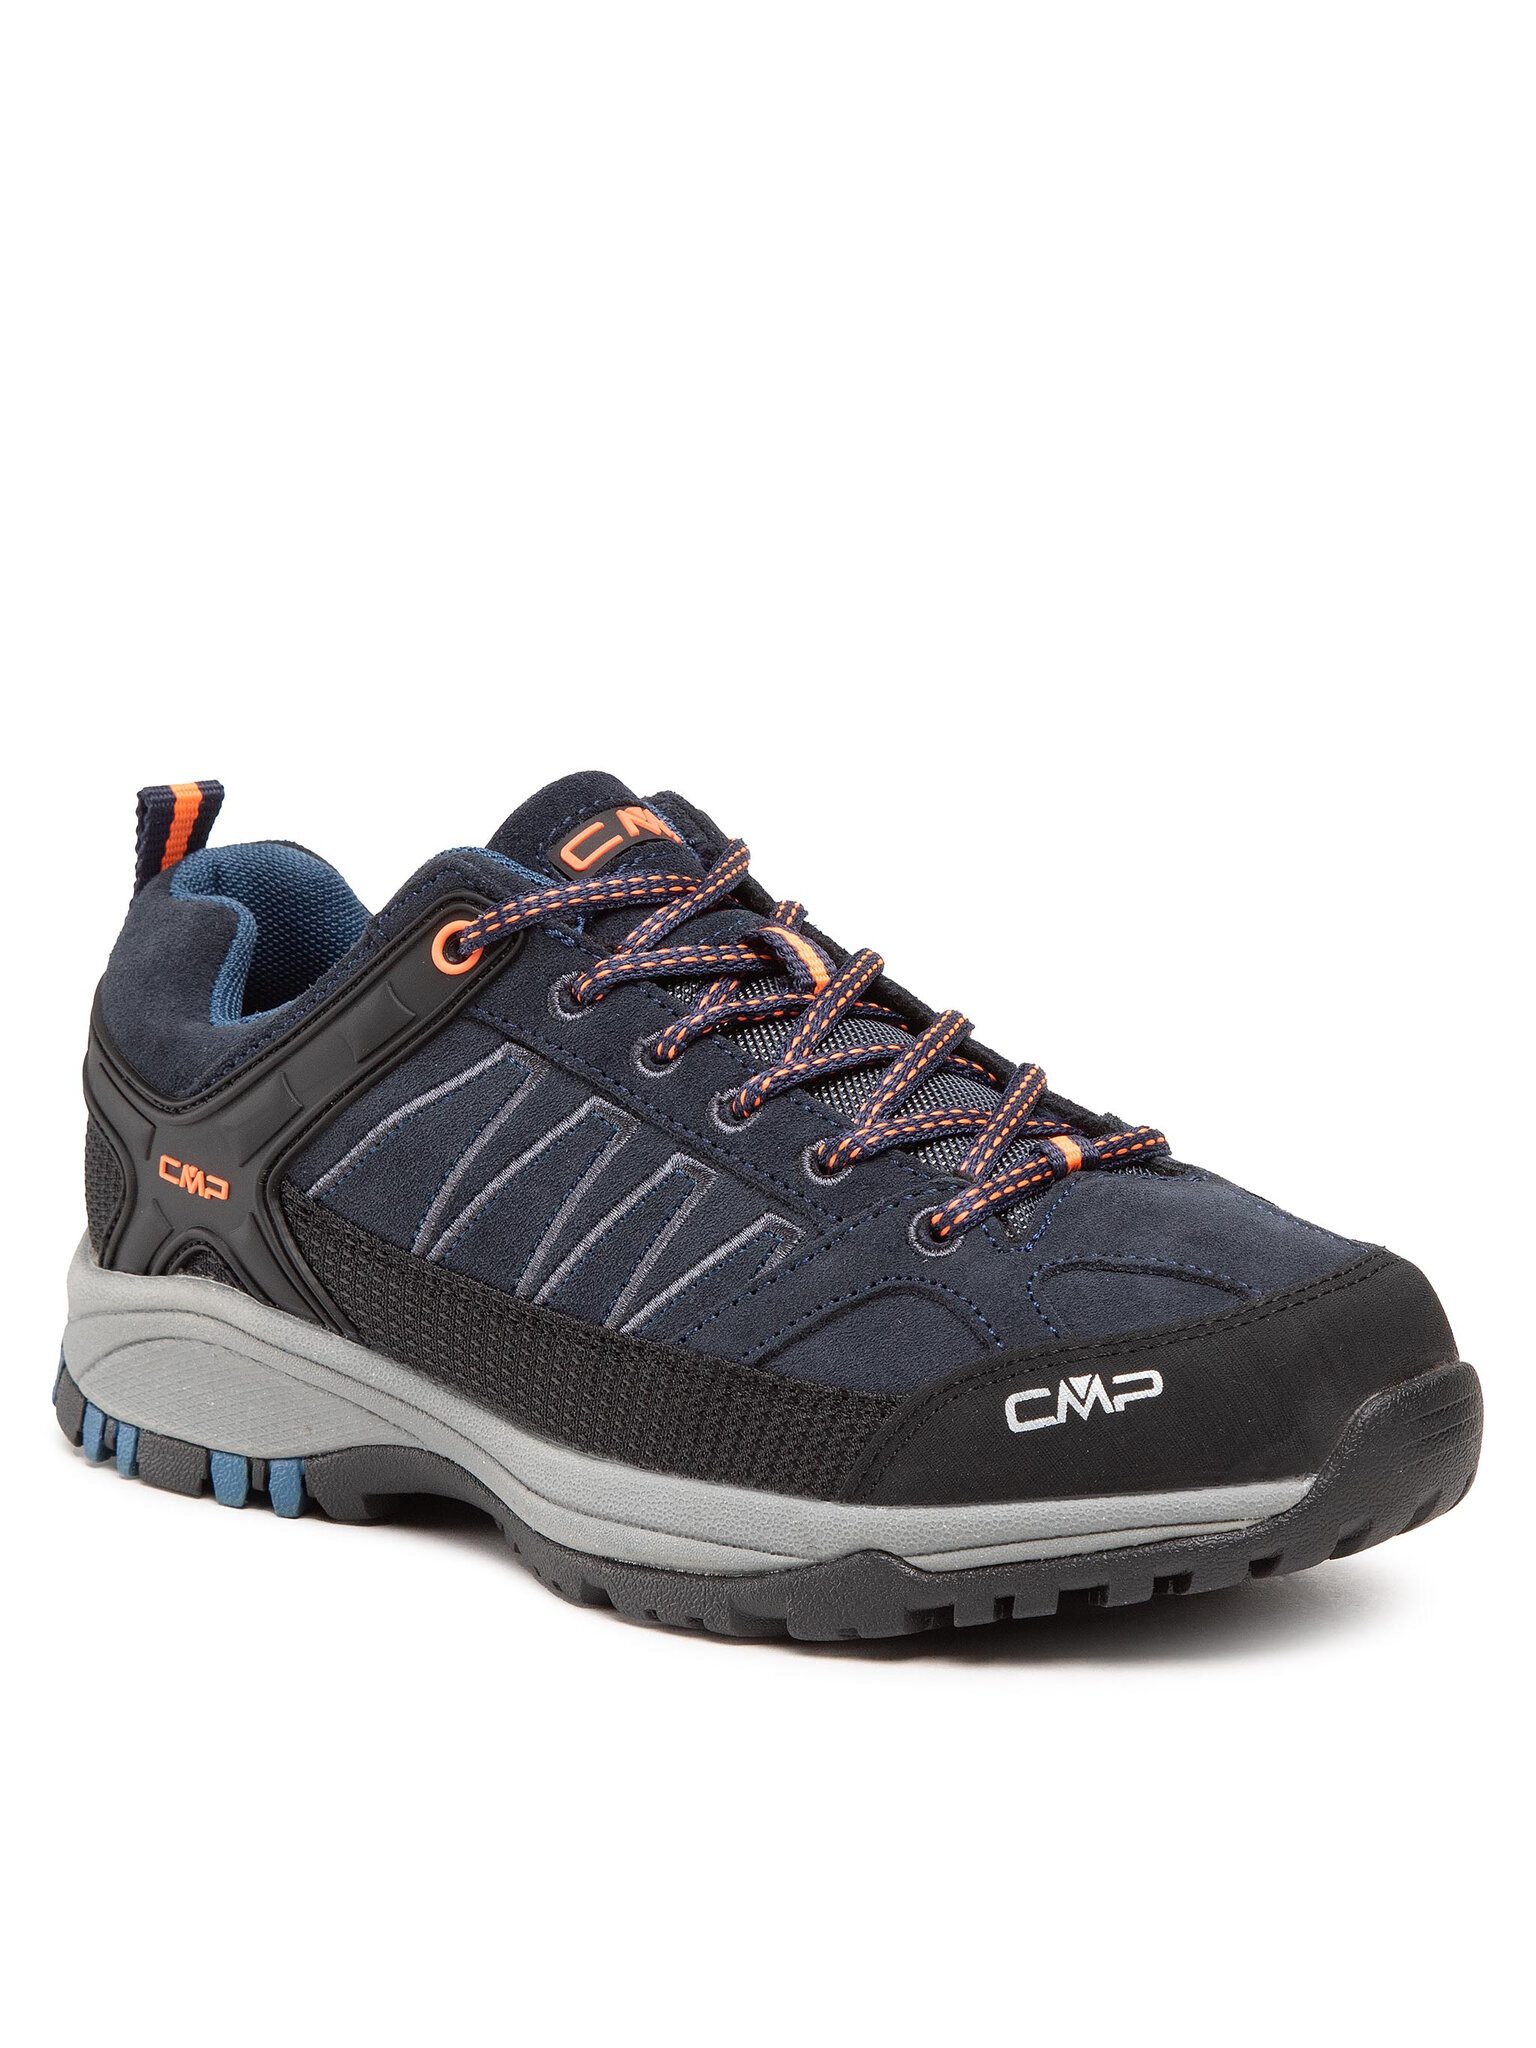 CMP Trekkingschuhe Sun Hiking Shoe 31Q4807 B.Blue/Flash Orange 27NM Trekkingschuh